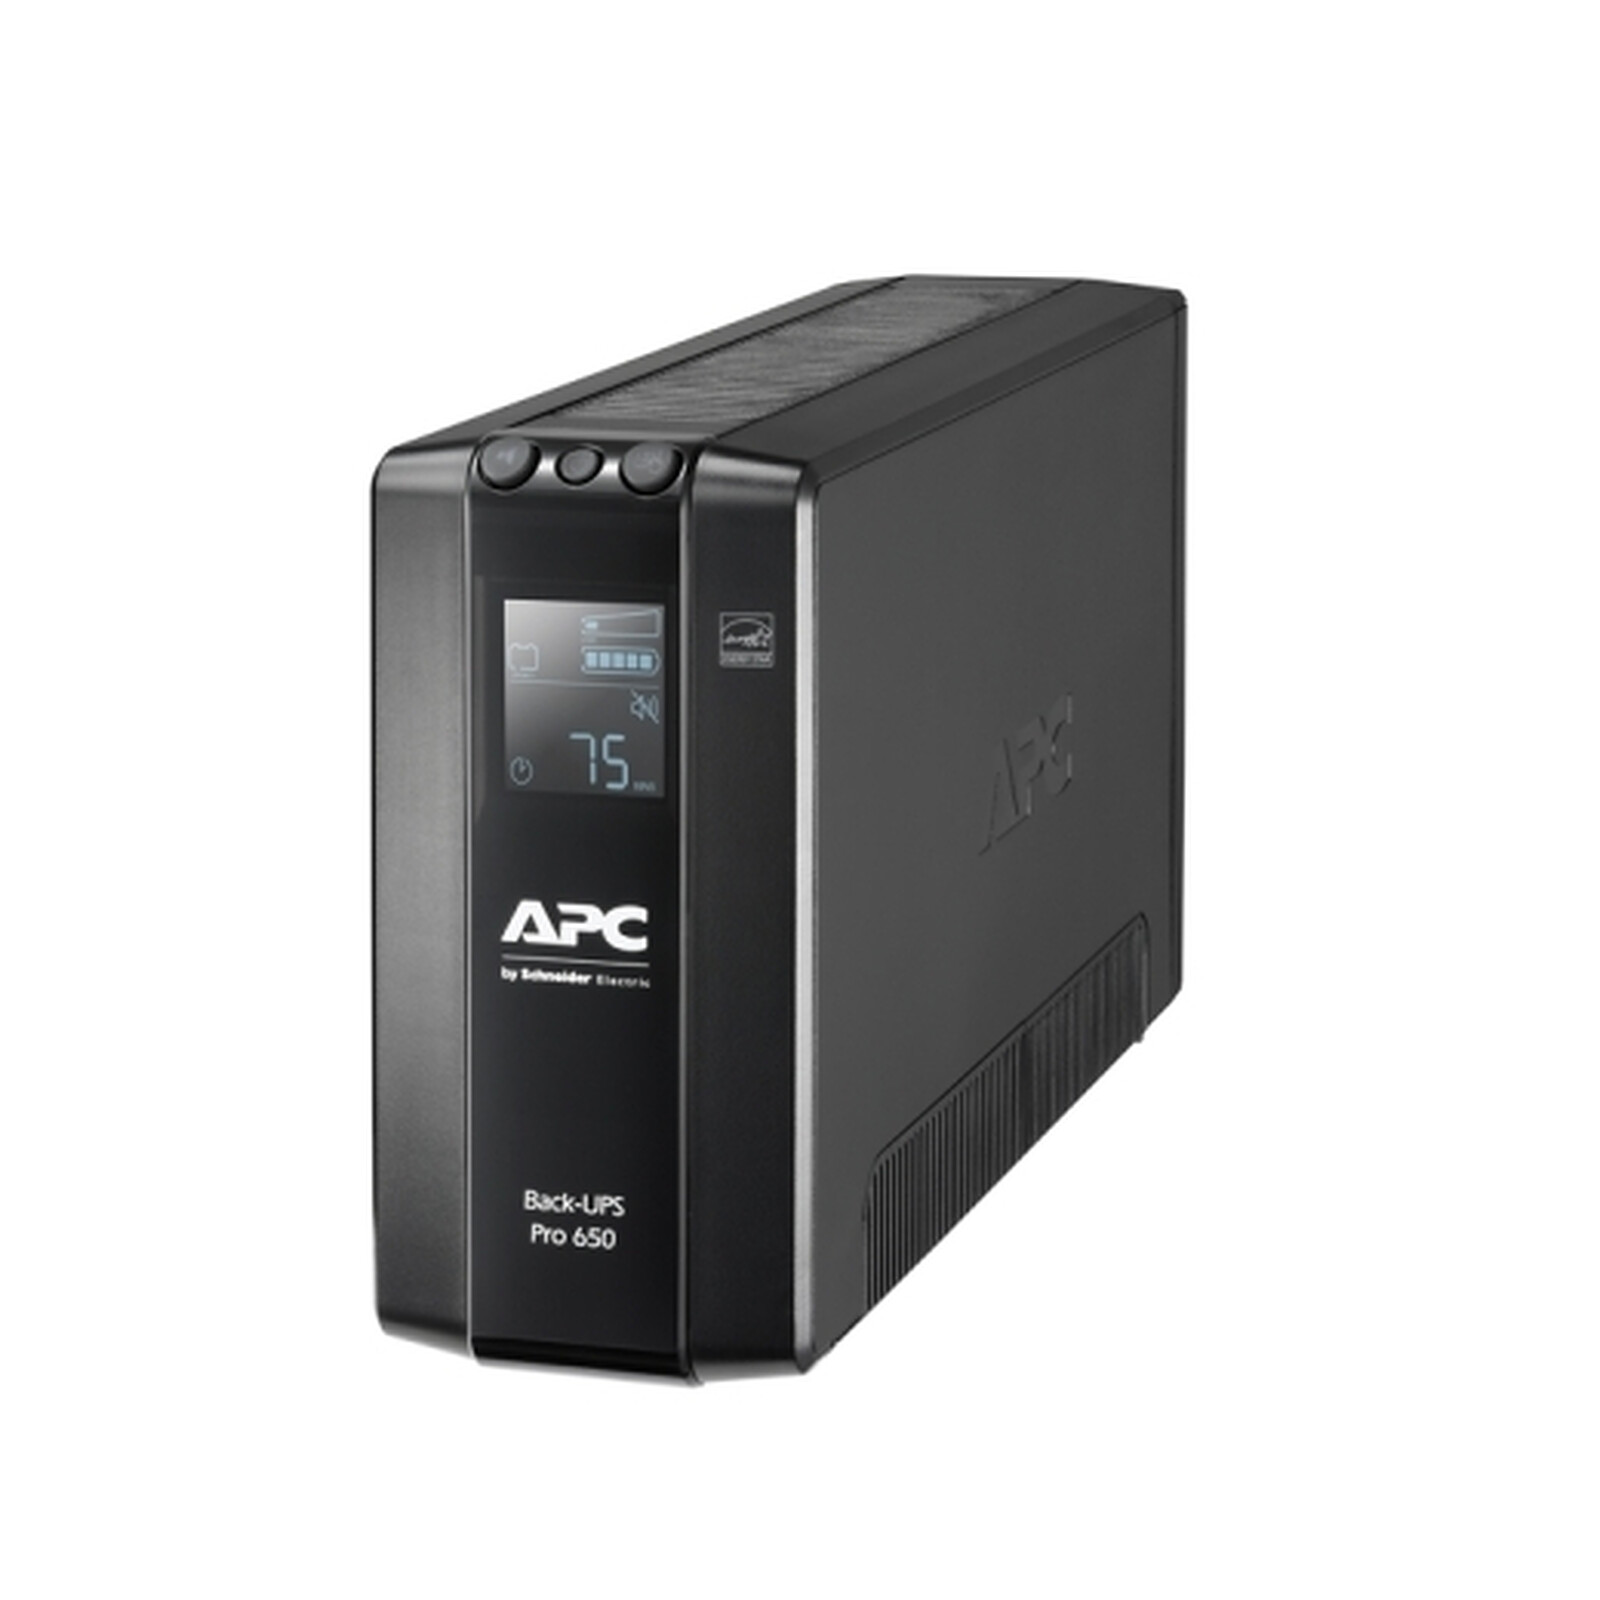 APC - APC Back-UPS - Onduleur - 950VA - Onduleur - APC